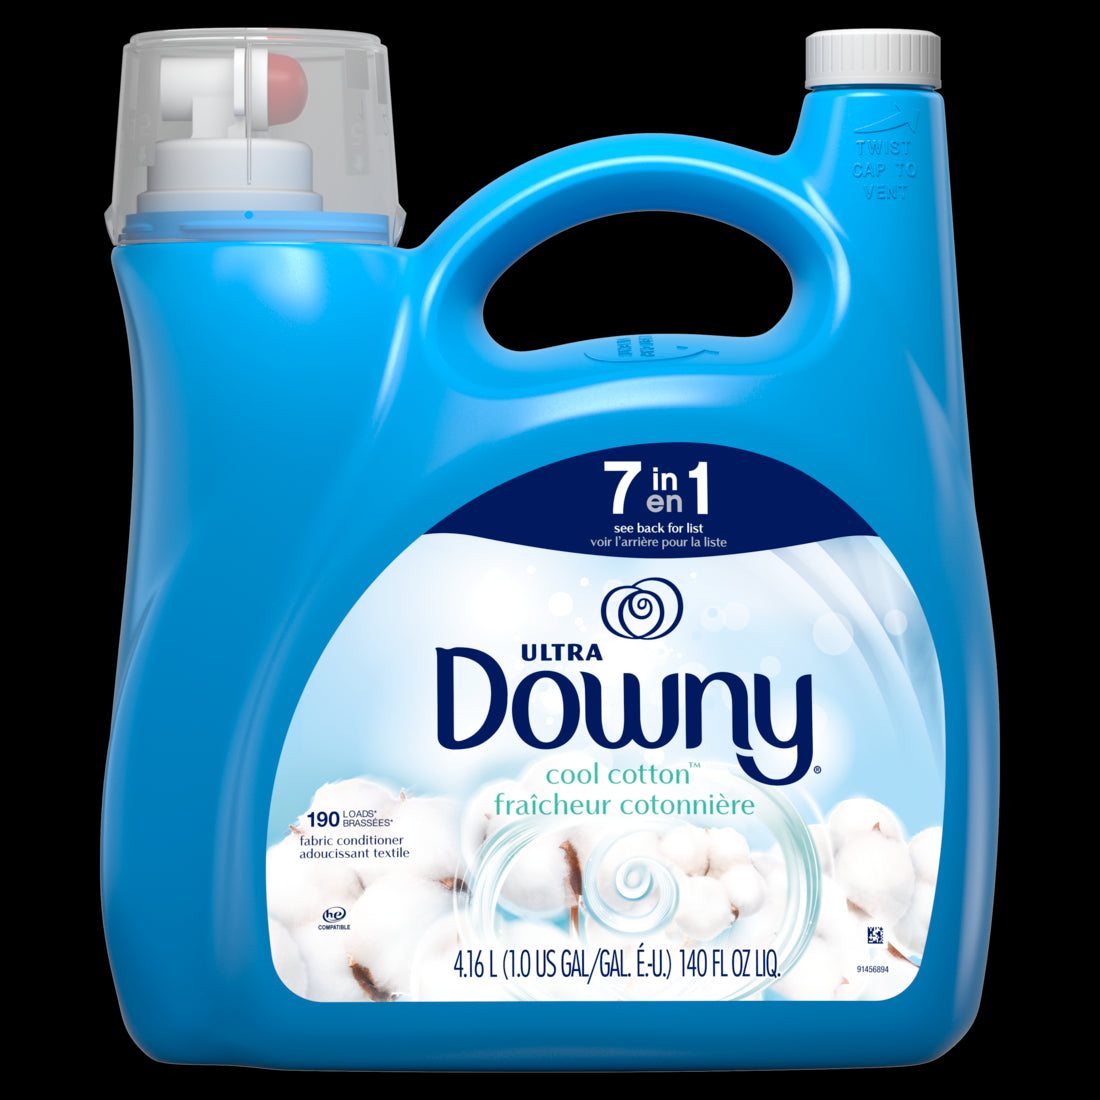 Downy Ultra Laundry Liquid Fabric Softener Cool Cotton 190 Loads - 140oz/4pk